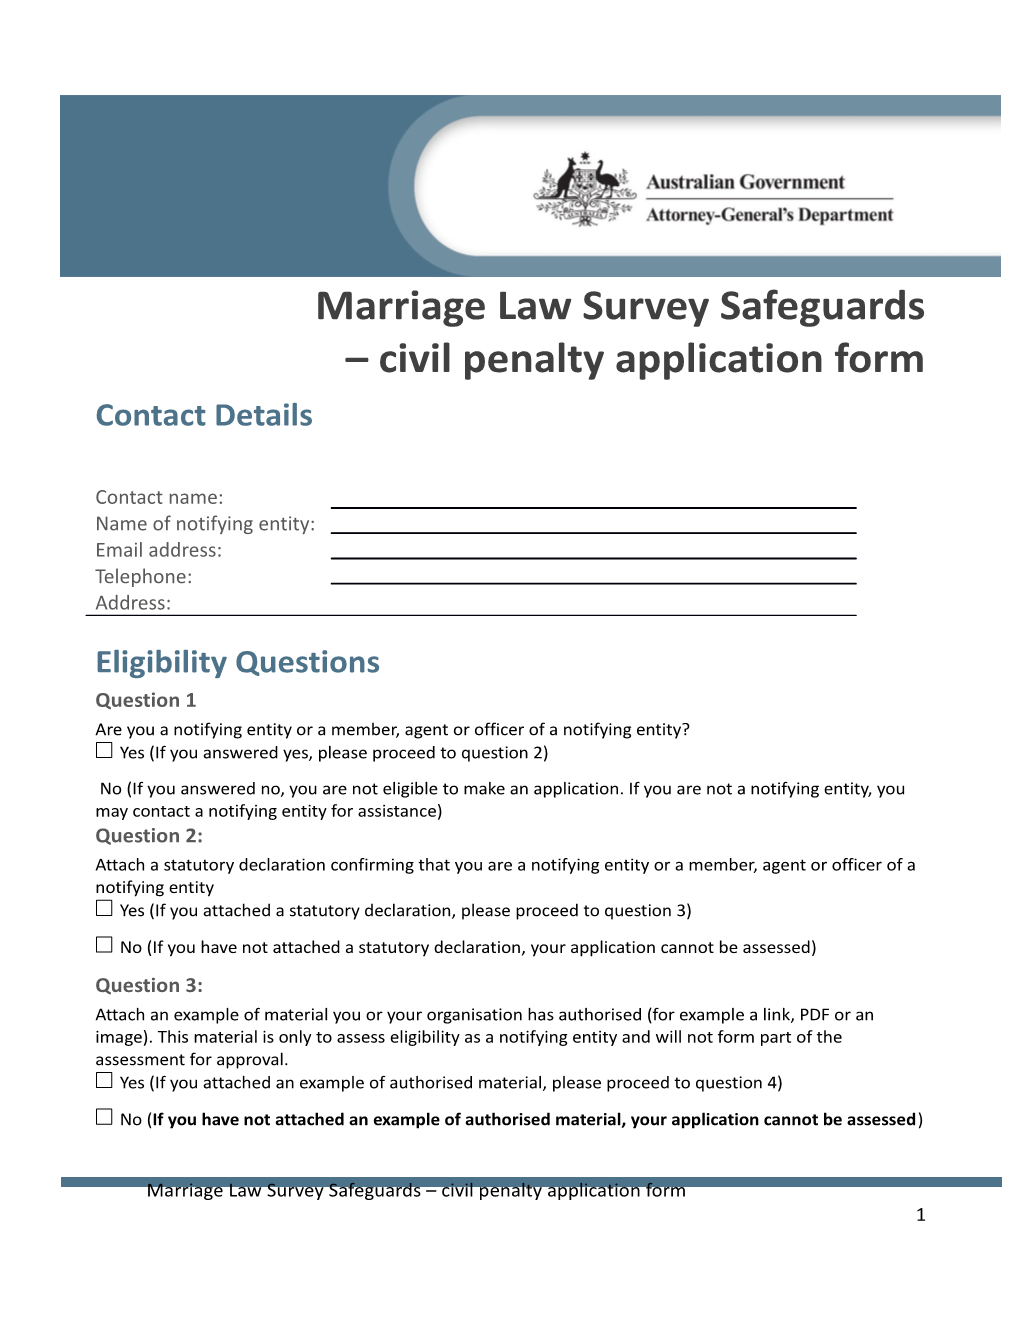 Marriage Law Survey Safeguards Civil Penalty Application Form